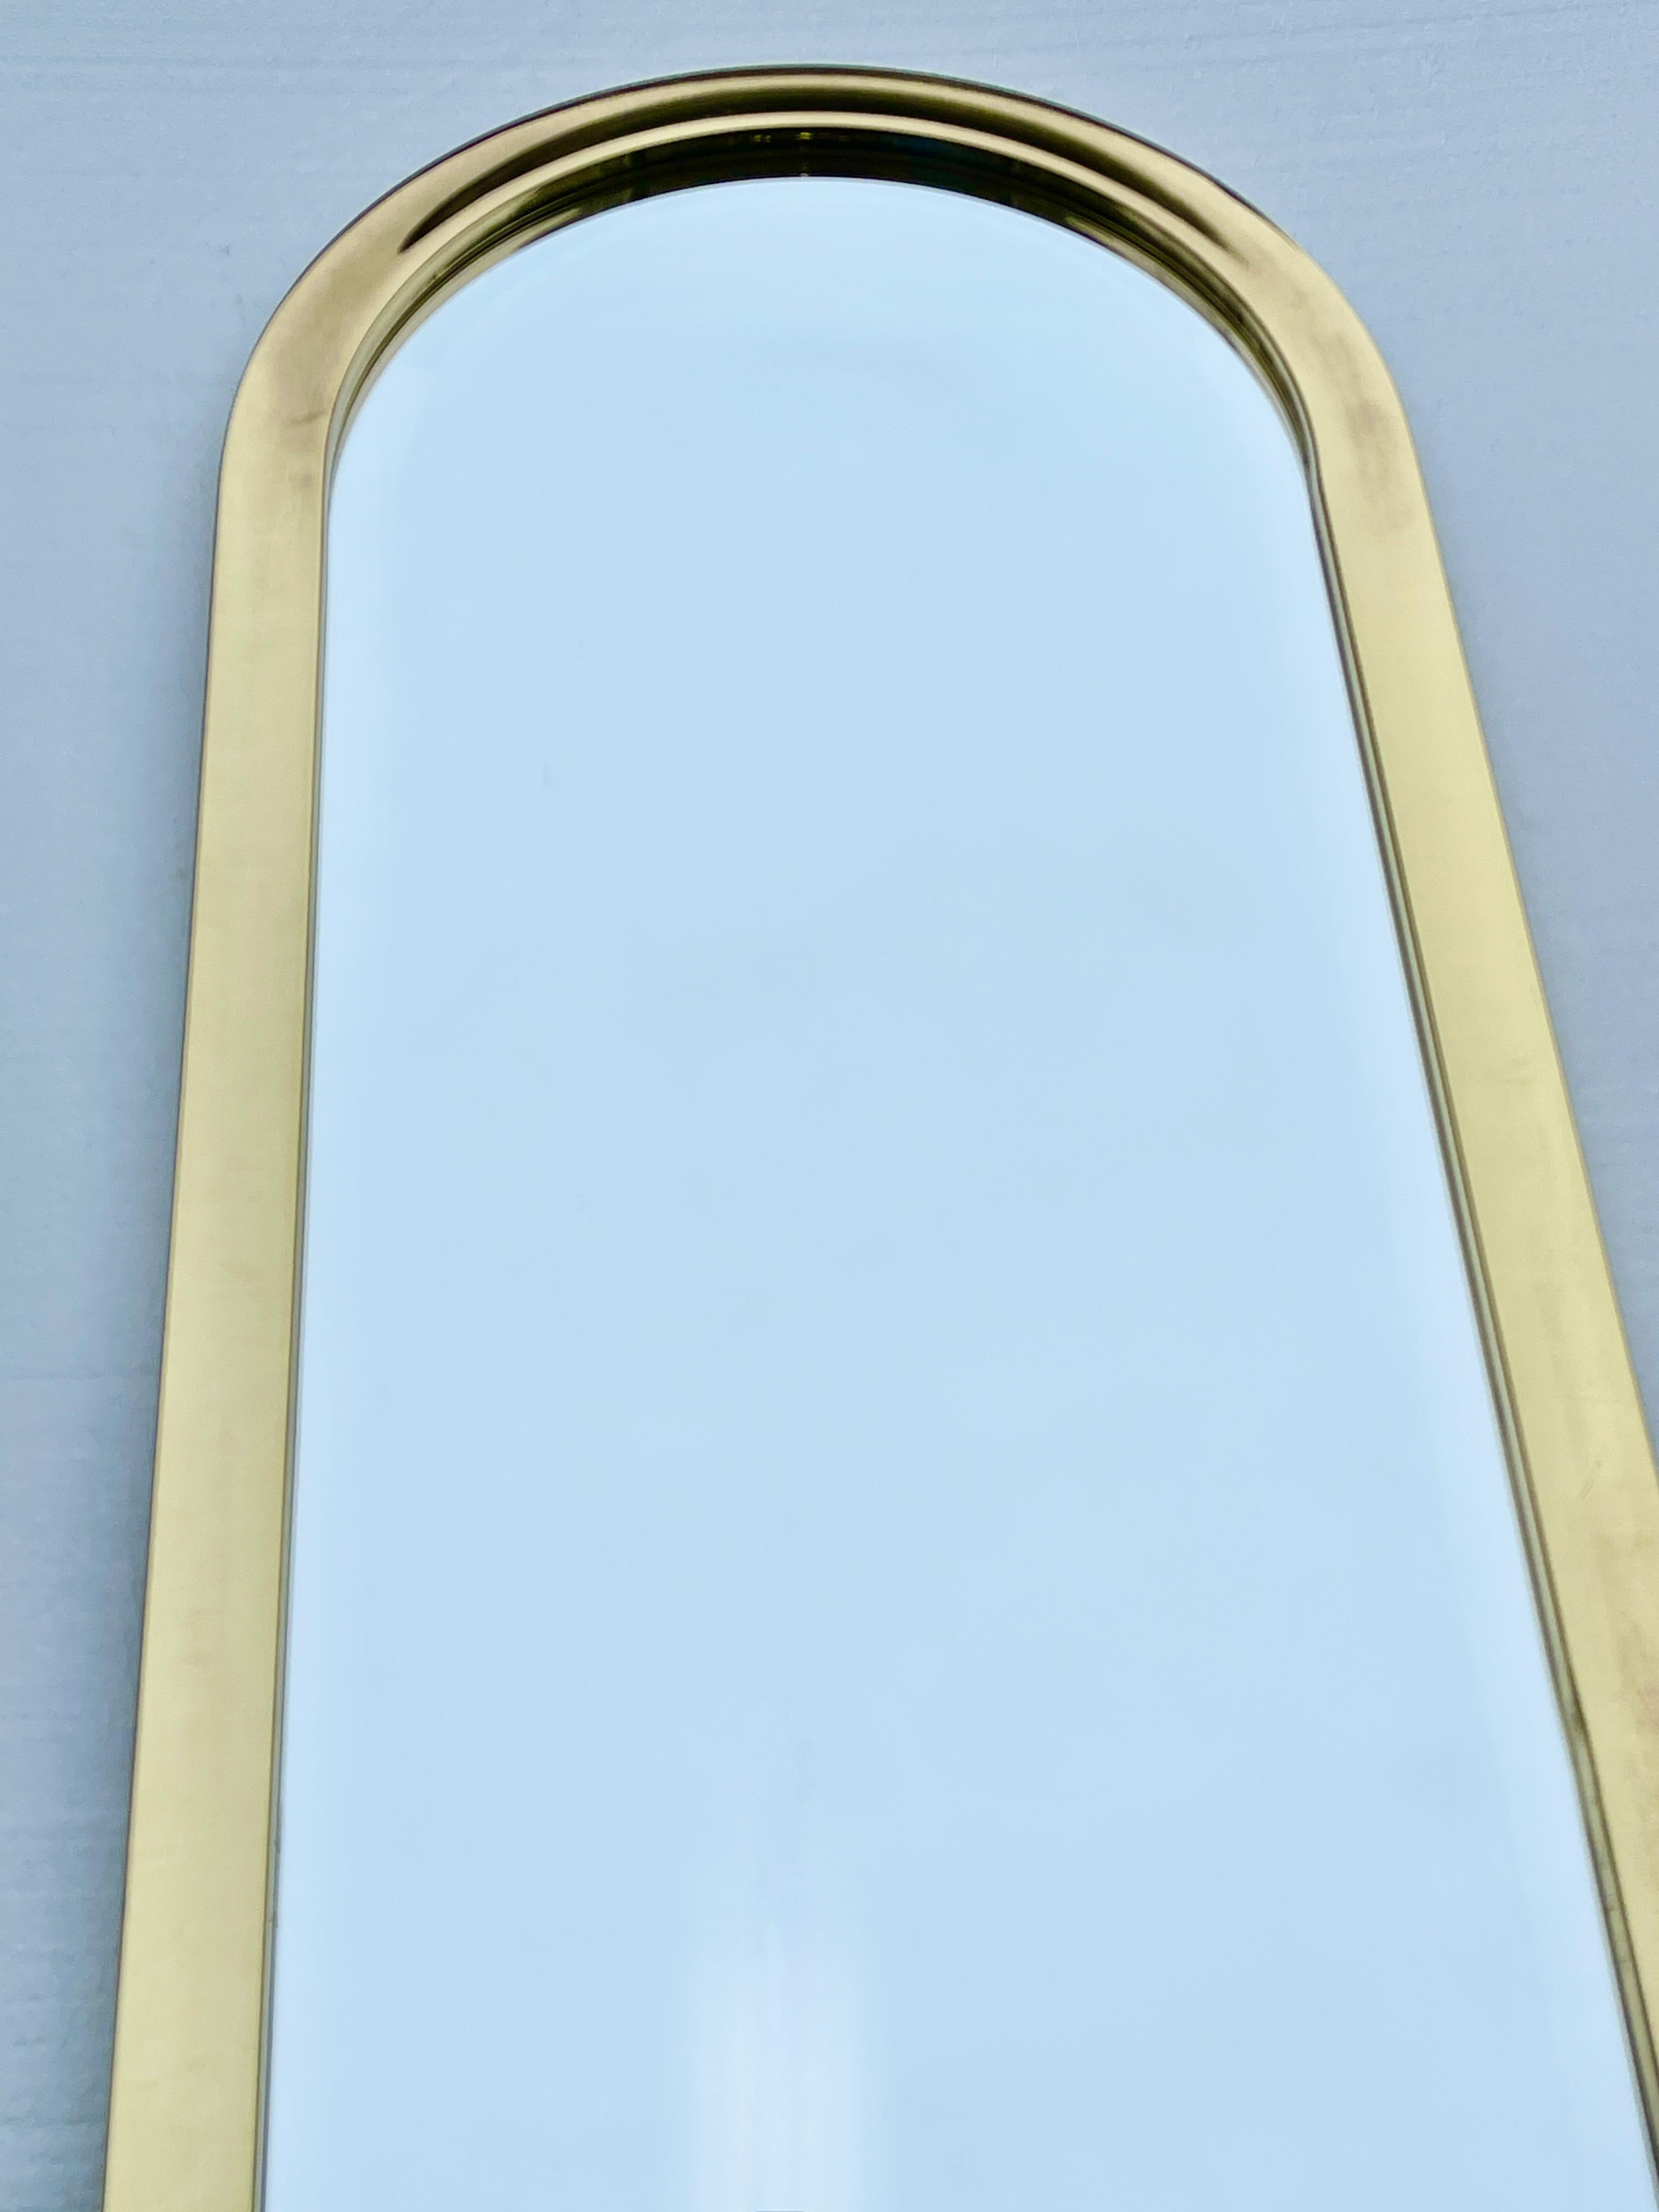 DIA Design Institute America Brass Racetrack Oval Mirror with Demilune Shelf For Sale 9